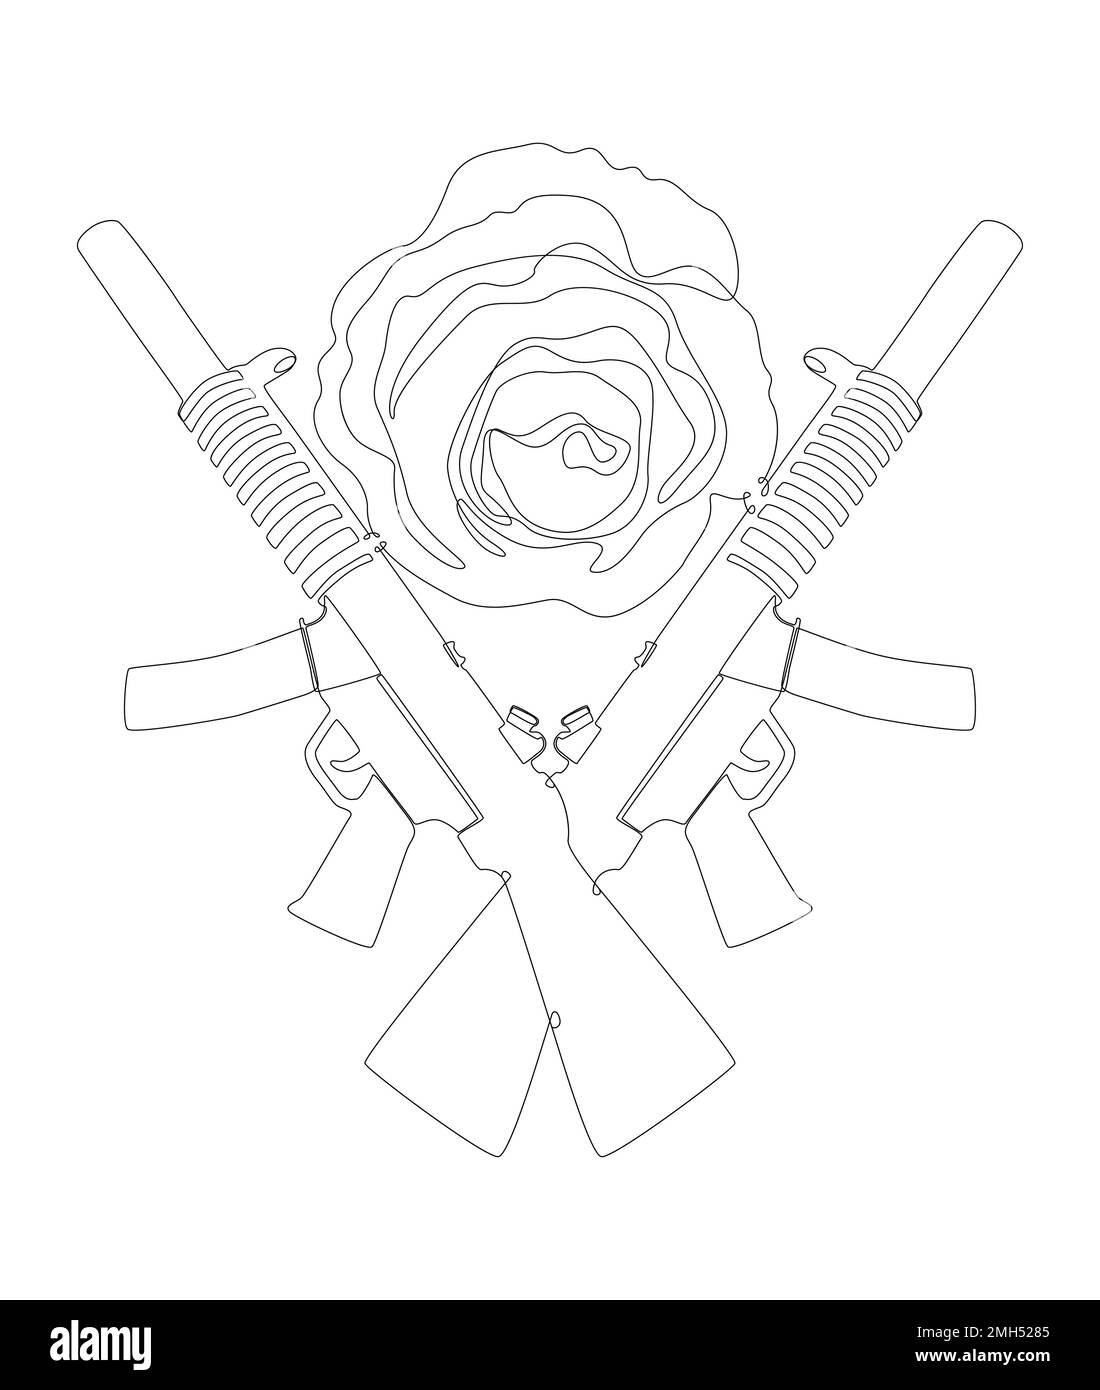 roses and guns drawings